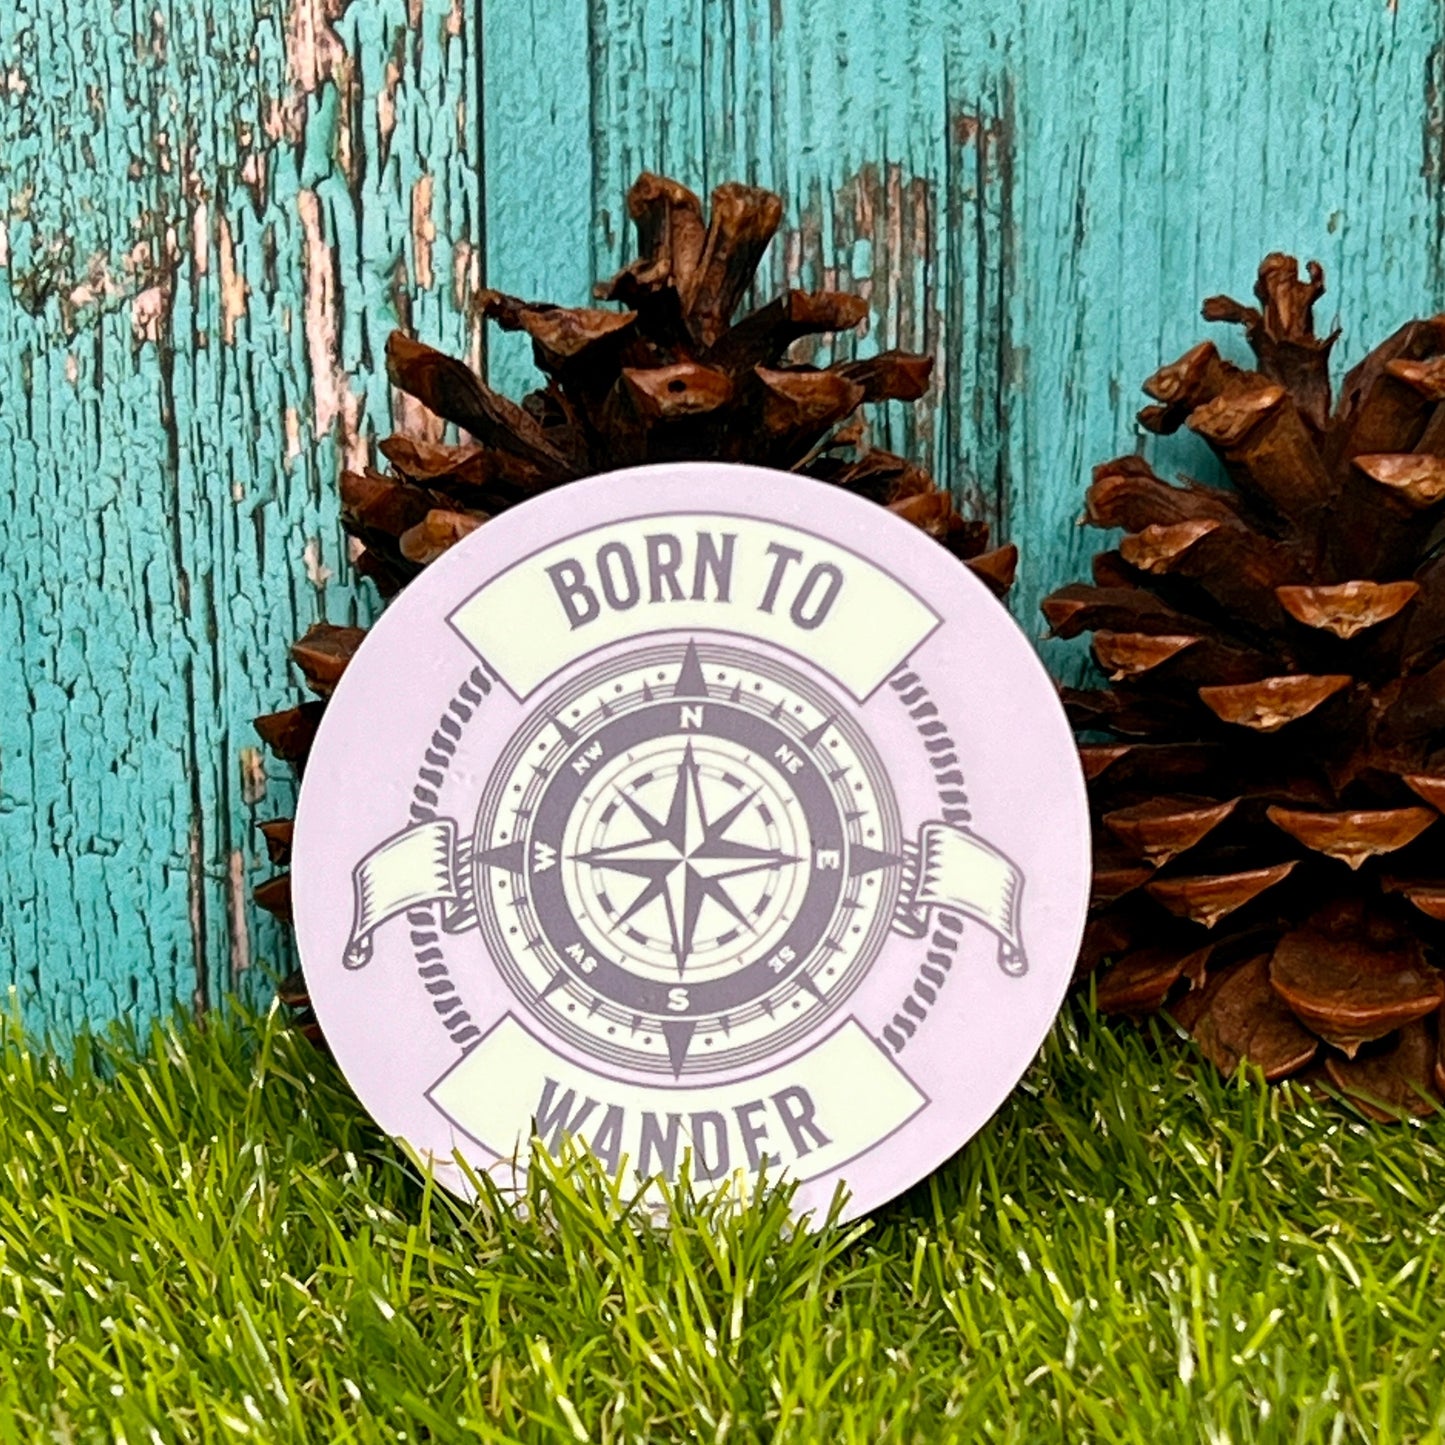 "Born to Wander" Waterproof Sticker Decal